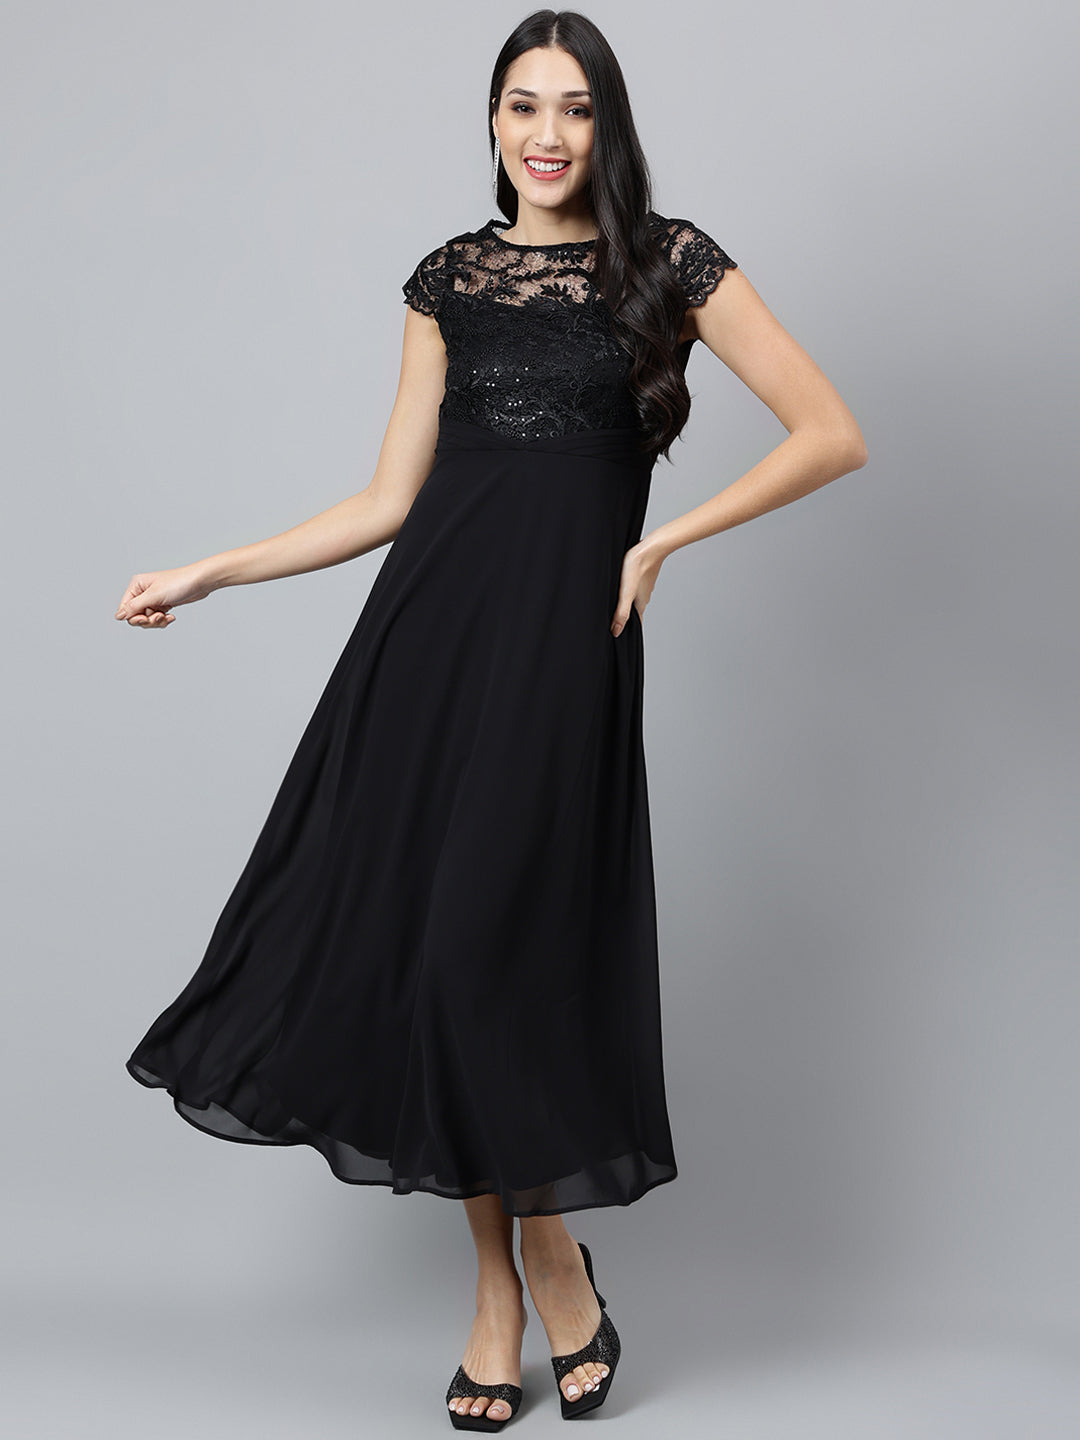 Black Solid Cap Sleeve Party Sequin Dress